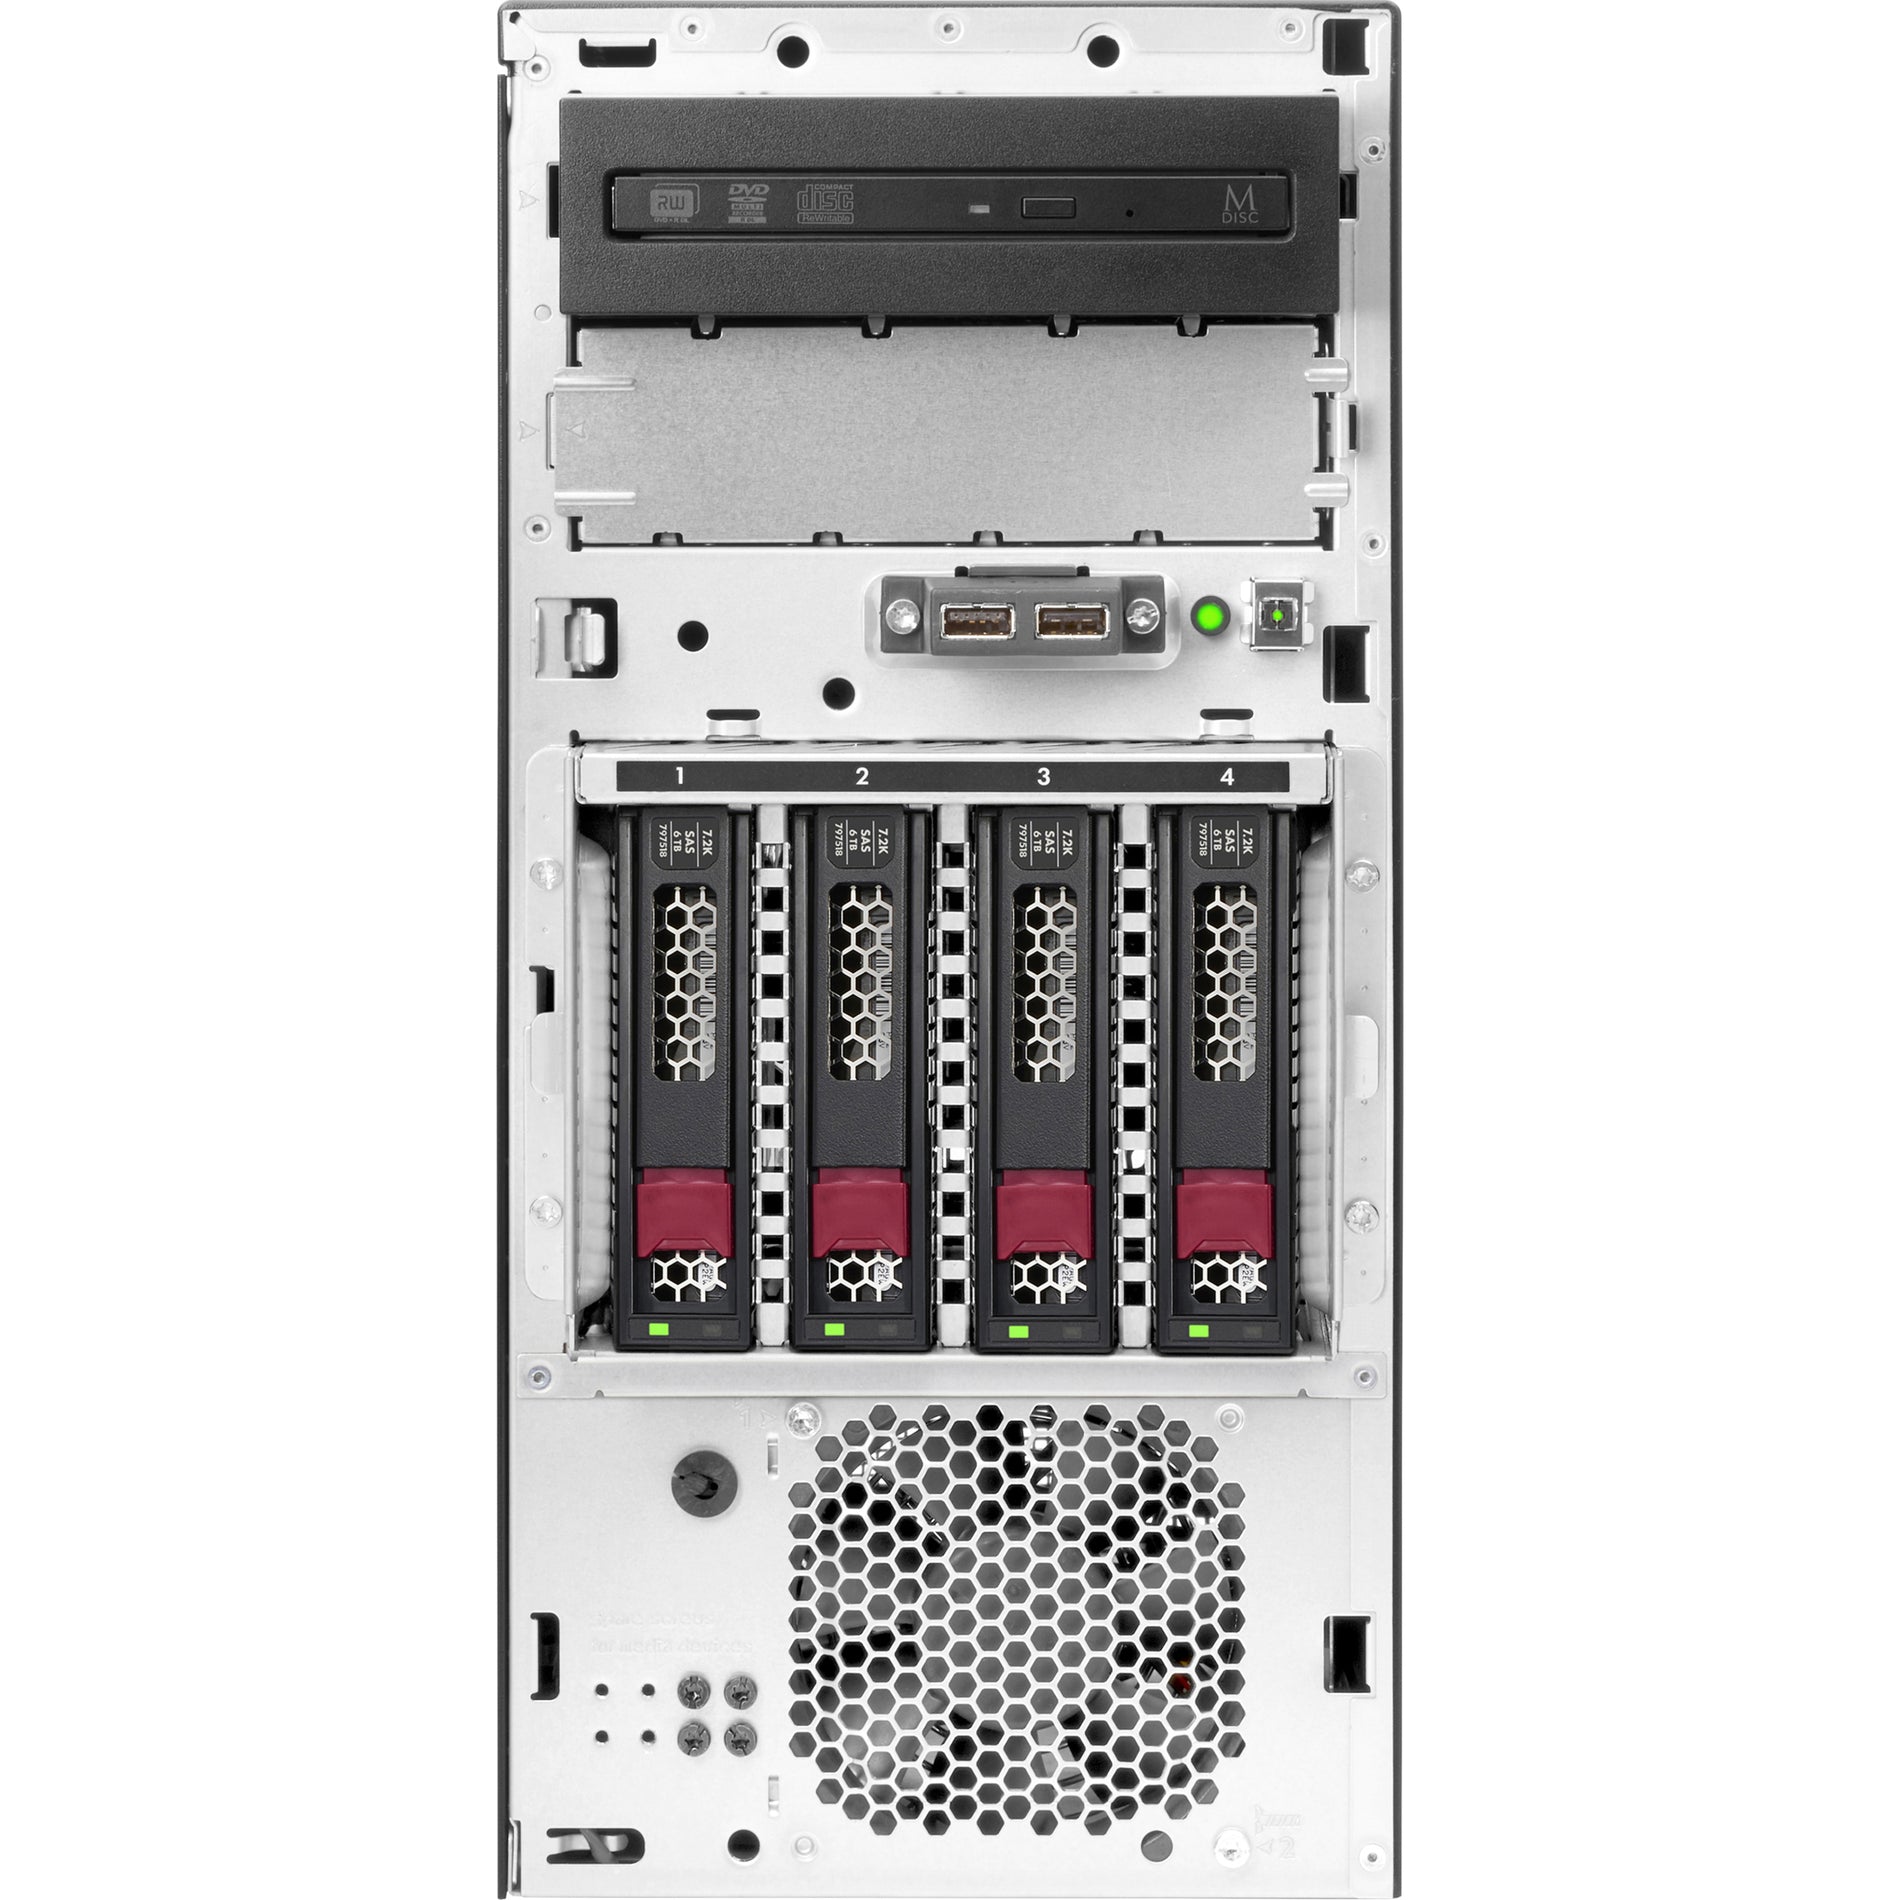 HPE P16926-S01 ProLiant ML30 Gen10 E-2224 3.4GHz 4-core 1P 8GB-U S100i 4LFF-NHP 350W PS Server, Quad-core, 8GB RAM, Tower